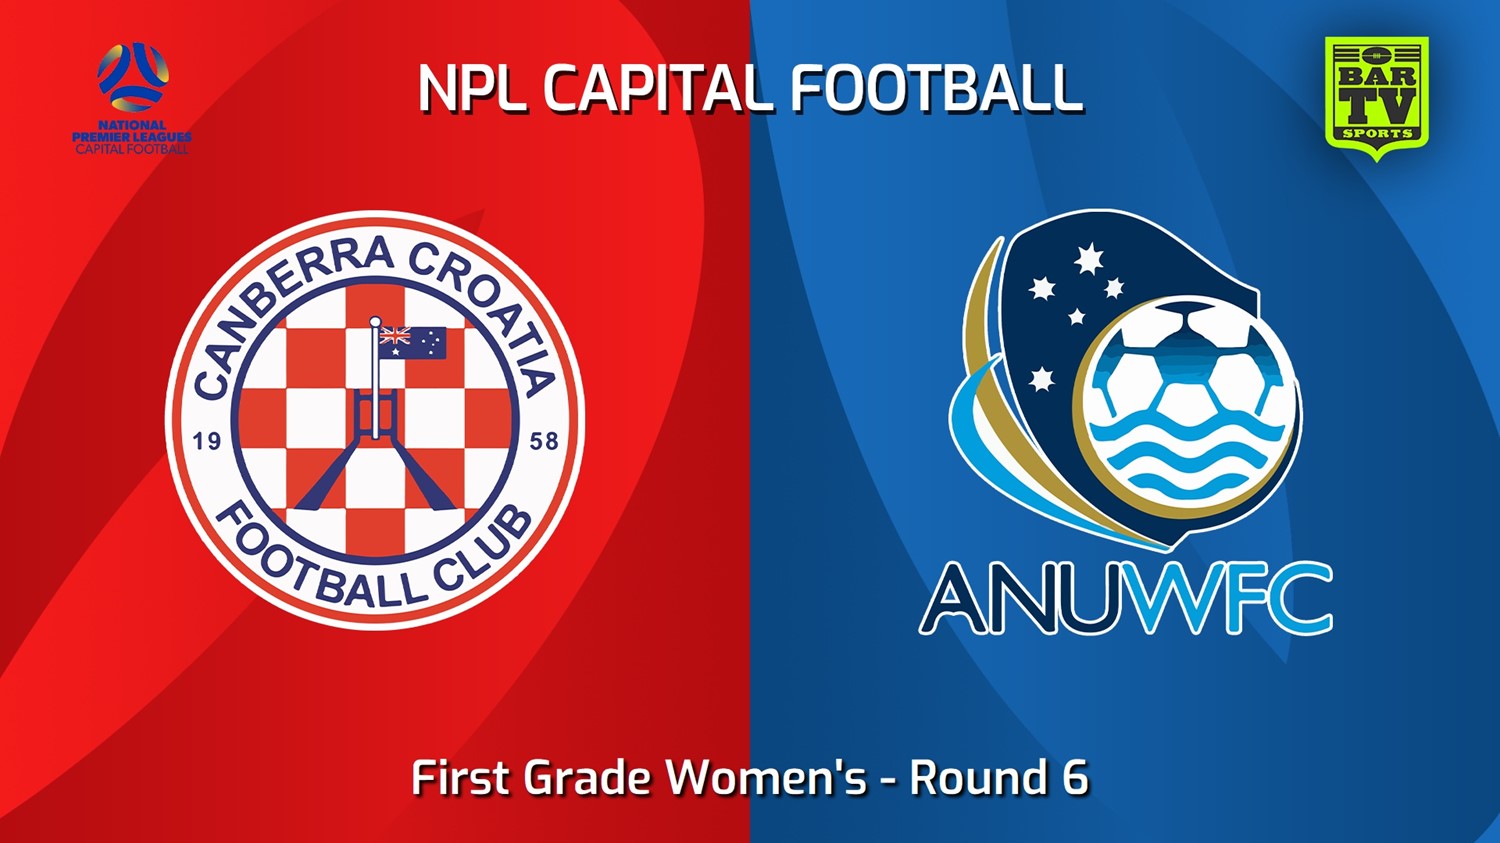 240512-video-Capital Womens Round 6 - Canberra Croatia FC W v ANU WFC Minigame Slate Image